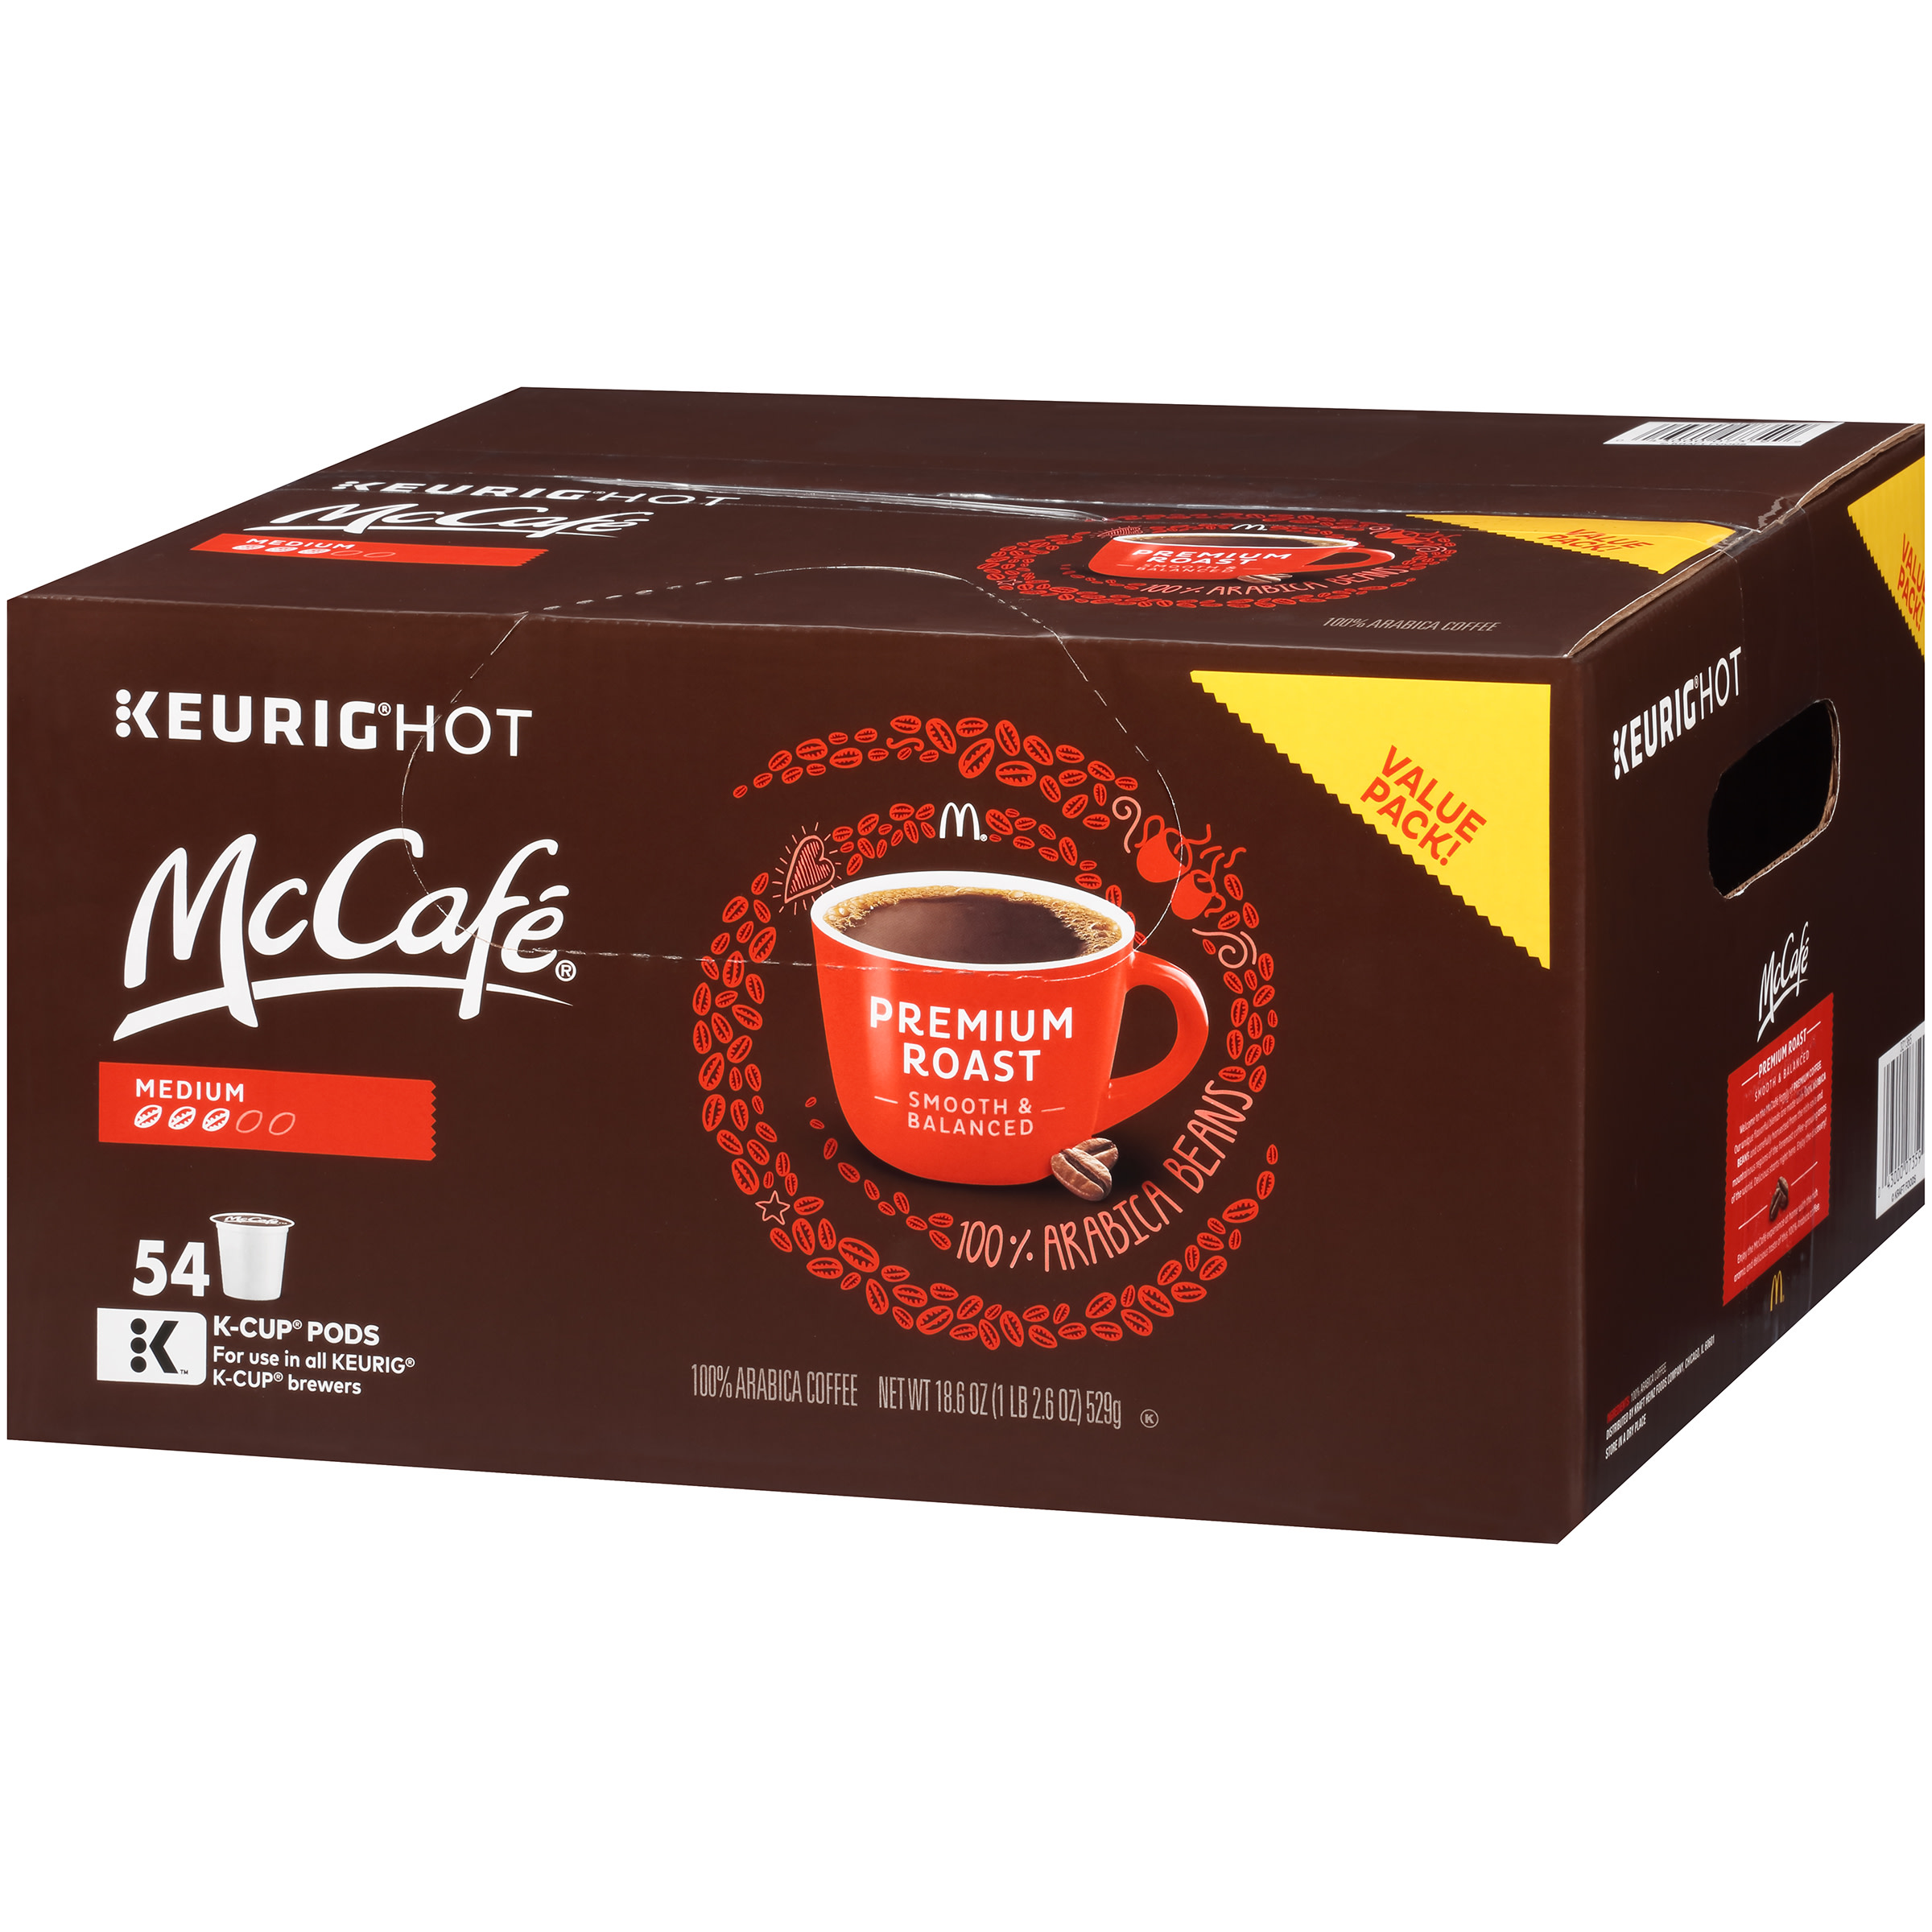 McCafe Premium Roast Medium Coffee K-Cup Pods, 54 ct - 18.6 oz Box - image 4 of 7